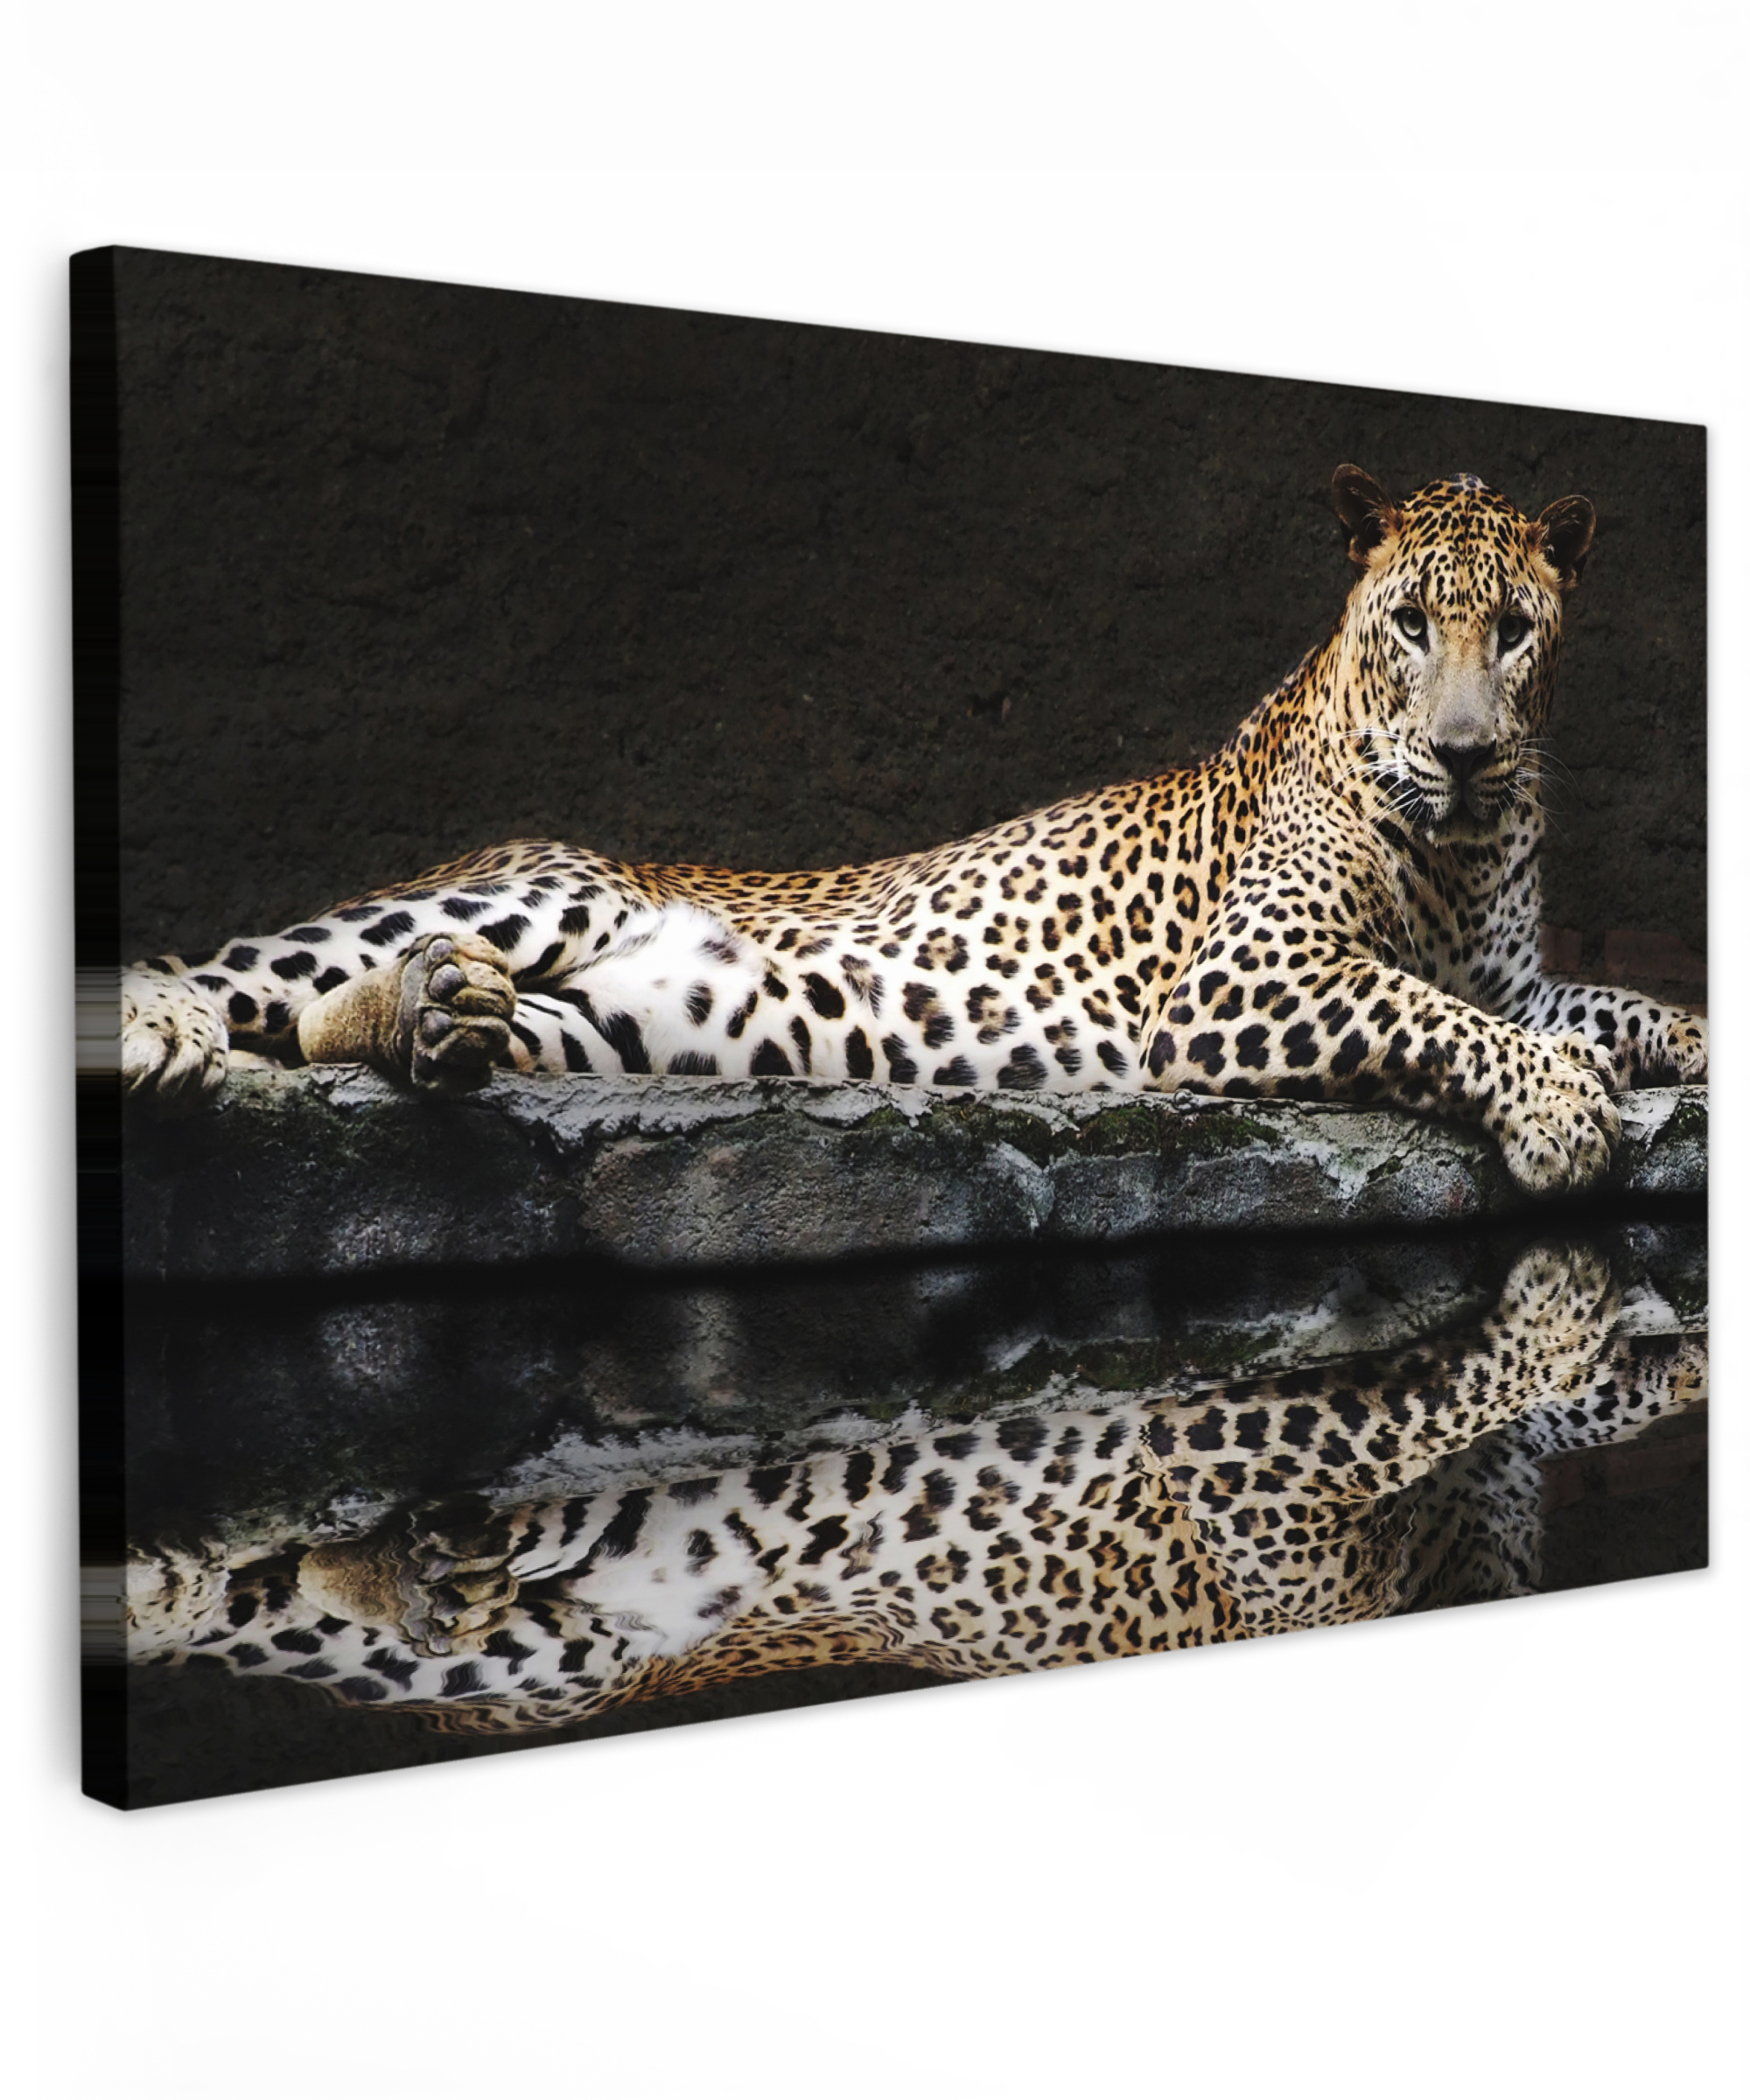 Leinwandbild - Leopard - Wasser - Wald